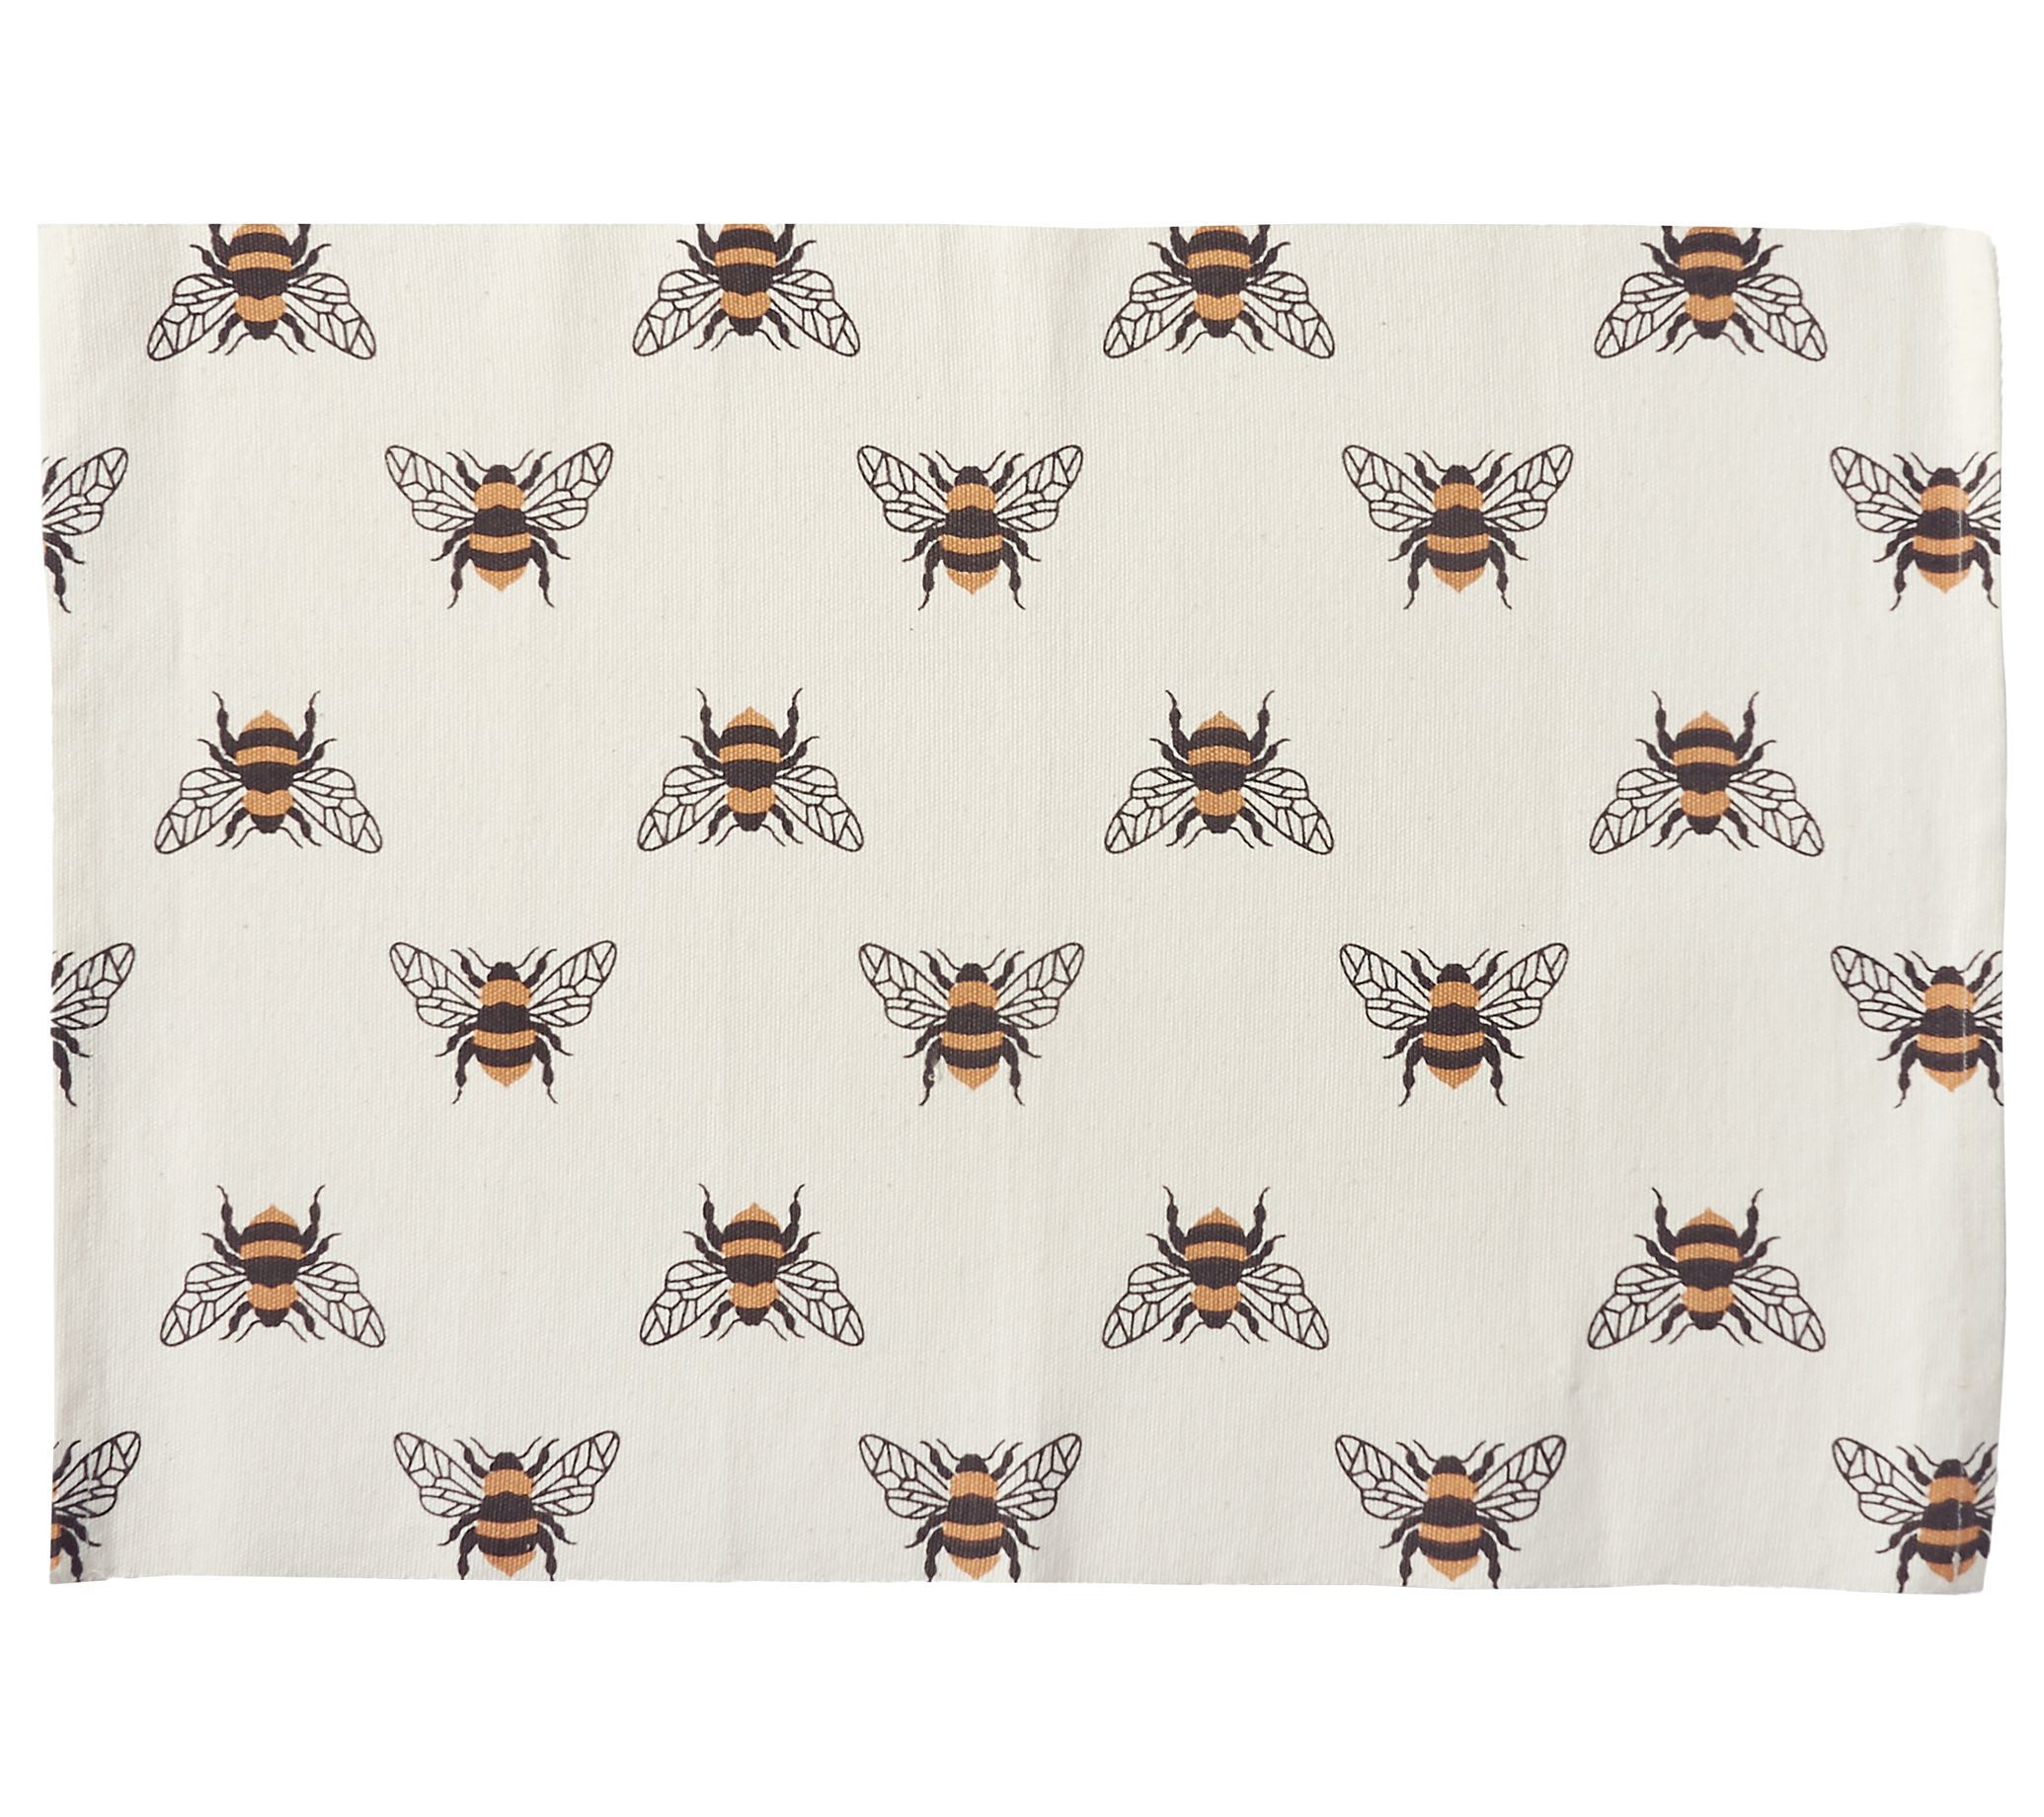 Bumble Bee Cotton Woven Placemat Set of 6 by Va lerie - QVC.com